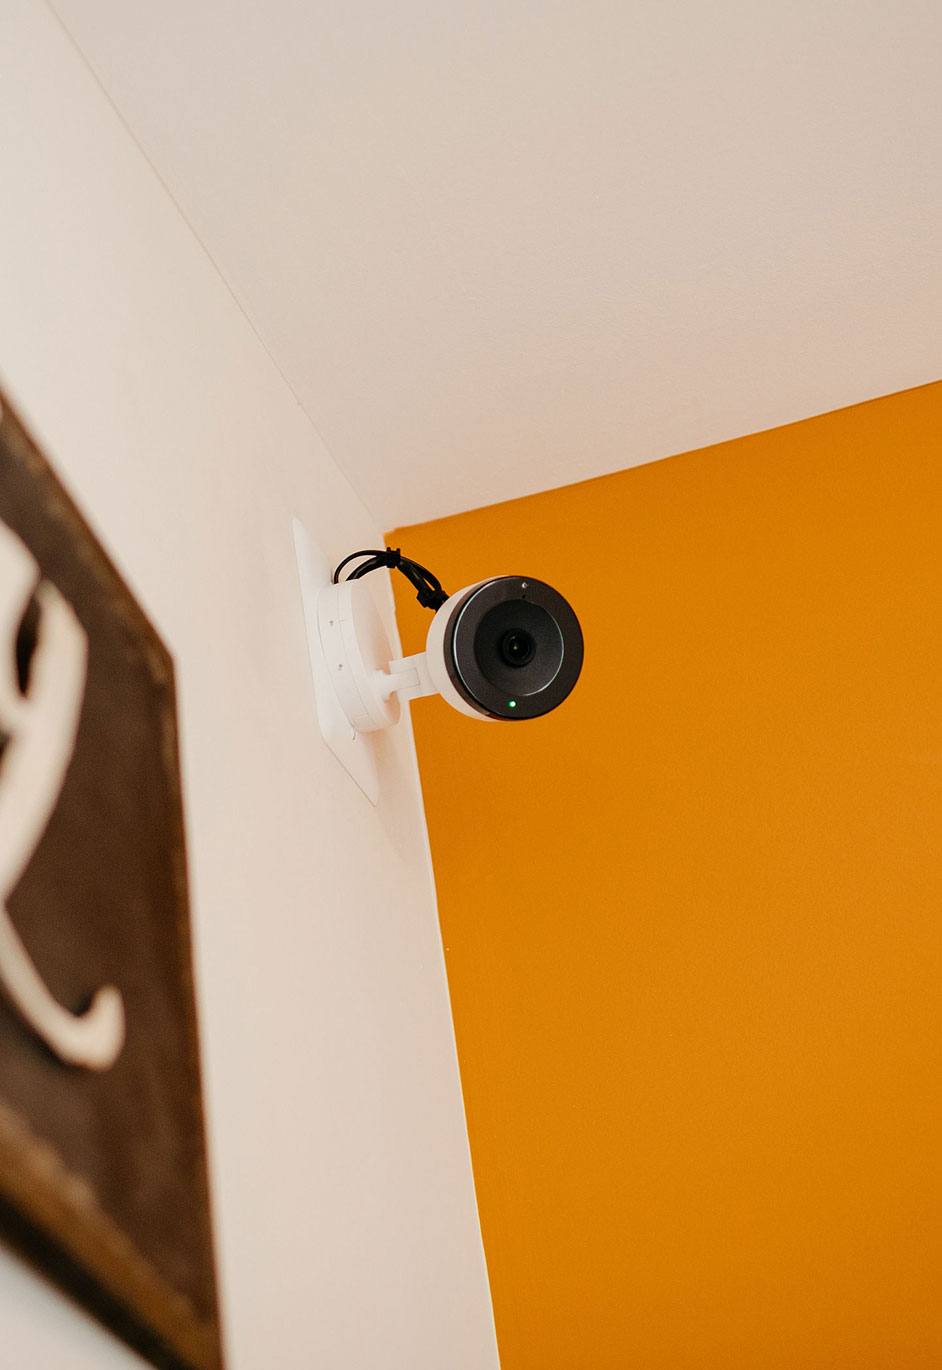 mounted indoor camera